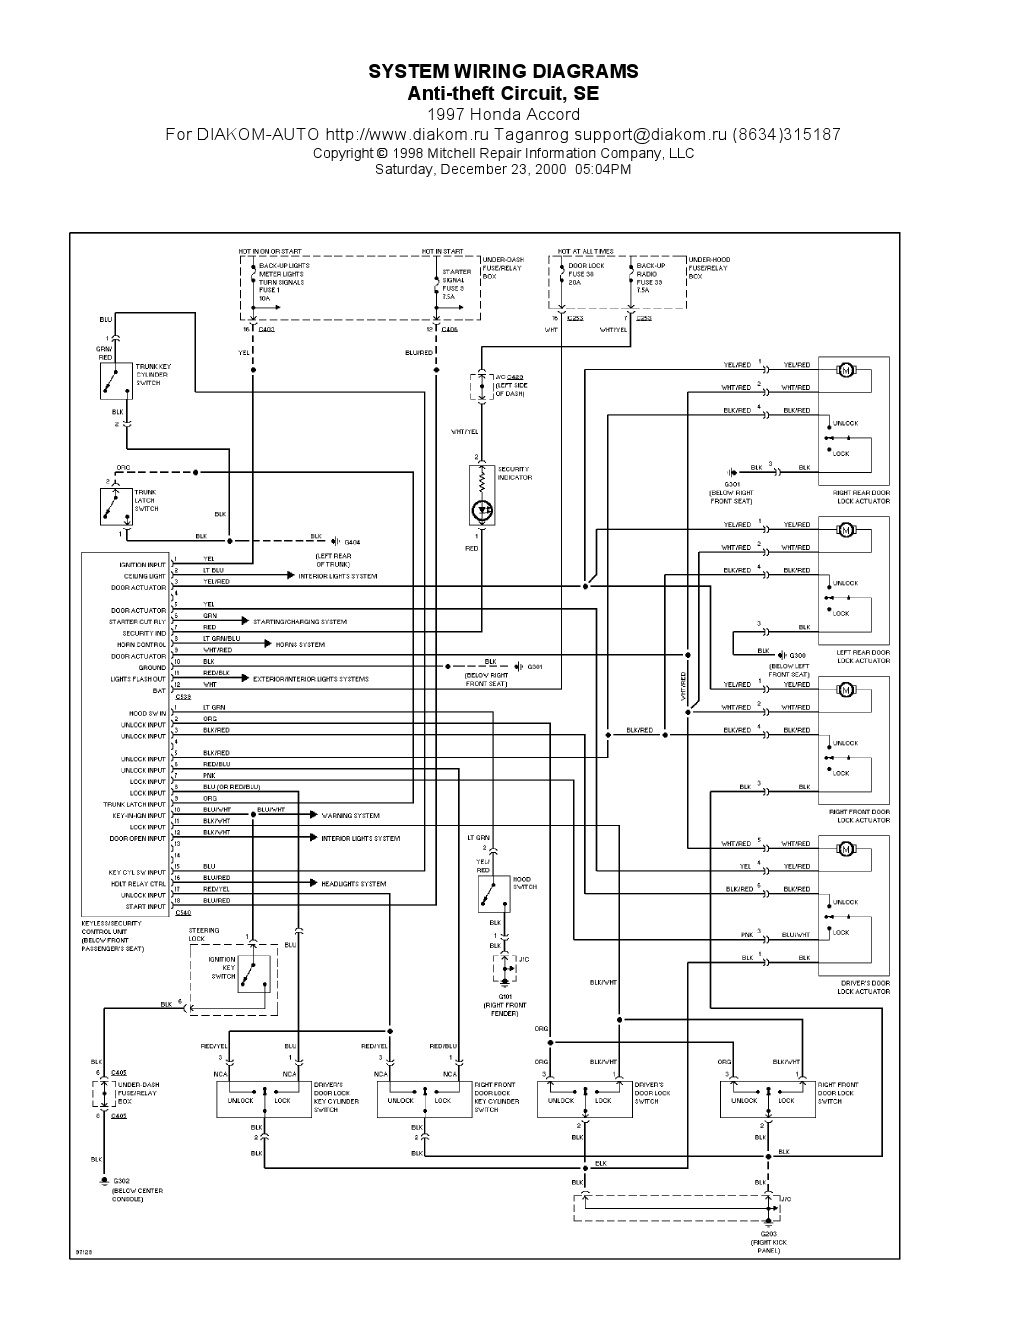 honda accord schematics blog wiring diagram 1997 honda accord electrical schematic honda accord schematic